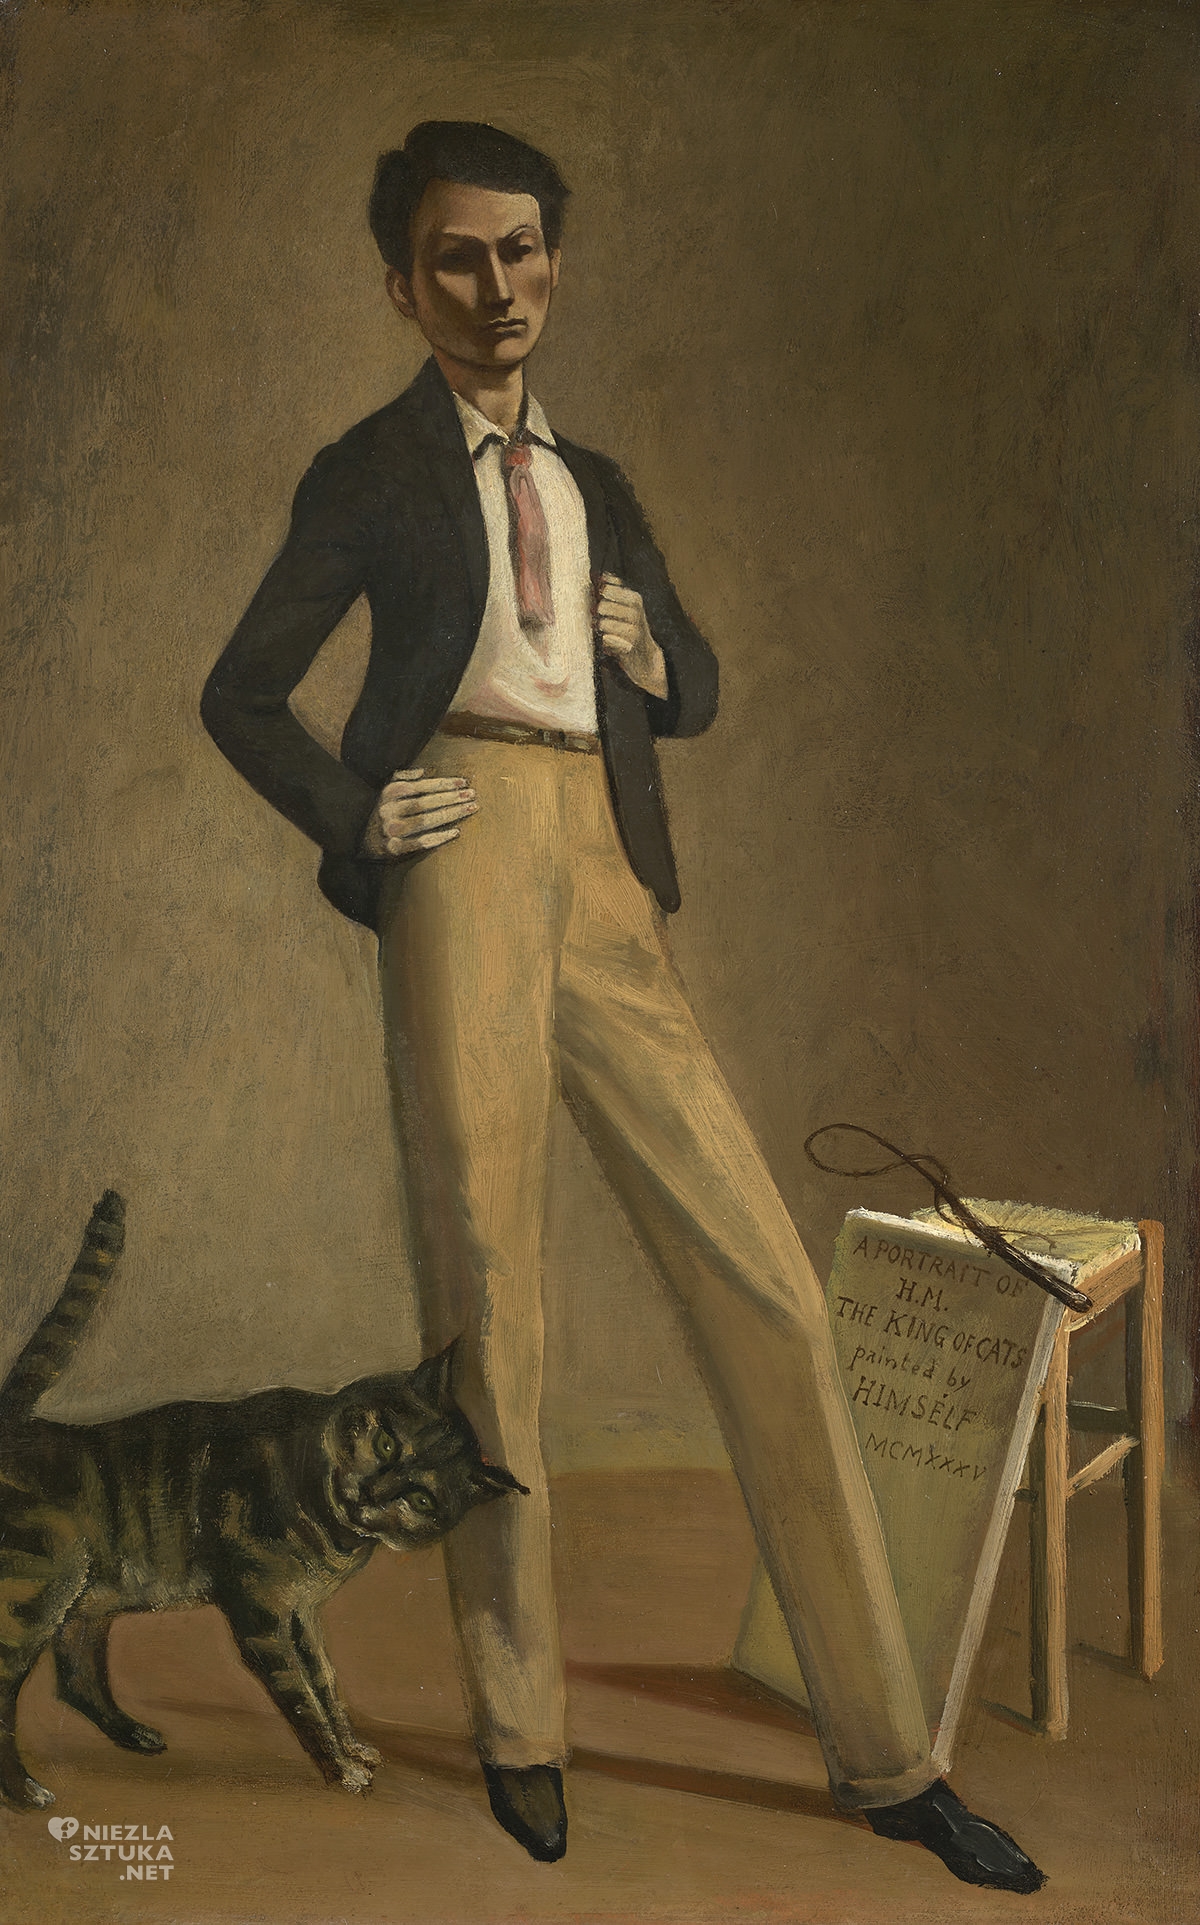 Balthus, Balthasar Klossowski de Rola, król kotów, autoportret, obraz, malarstwo francuskie, Niezła sztuka